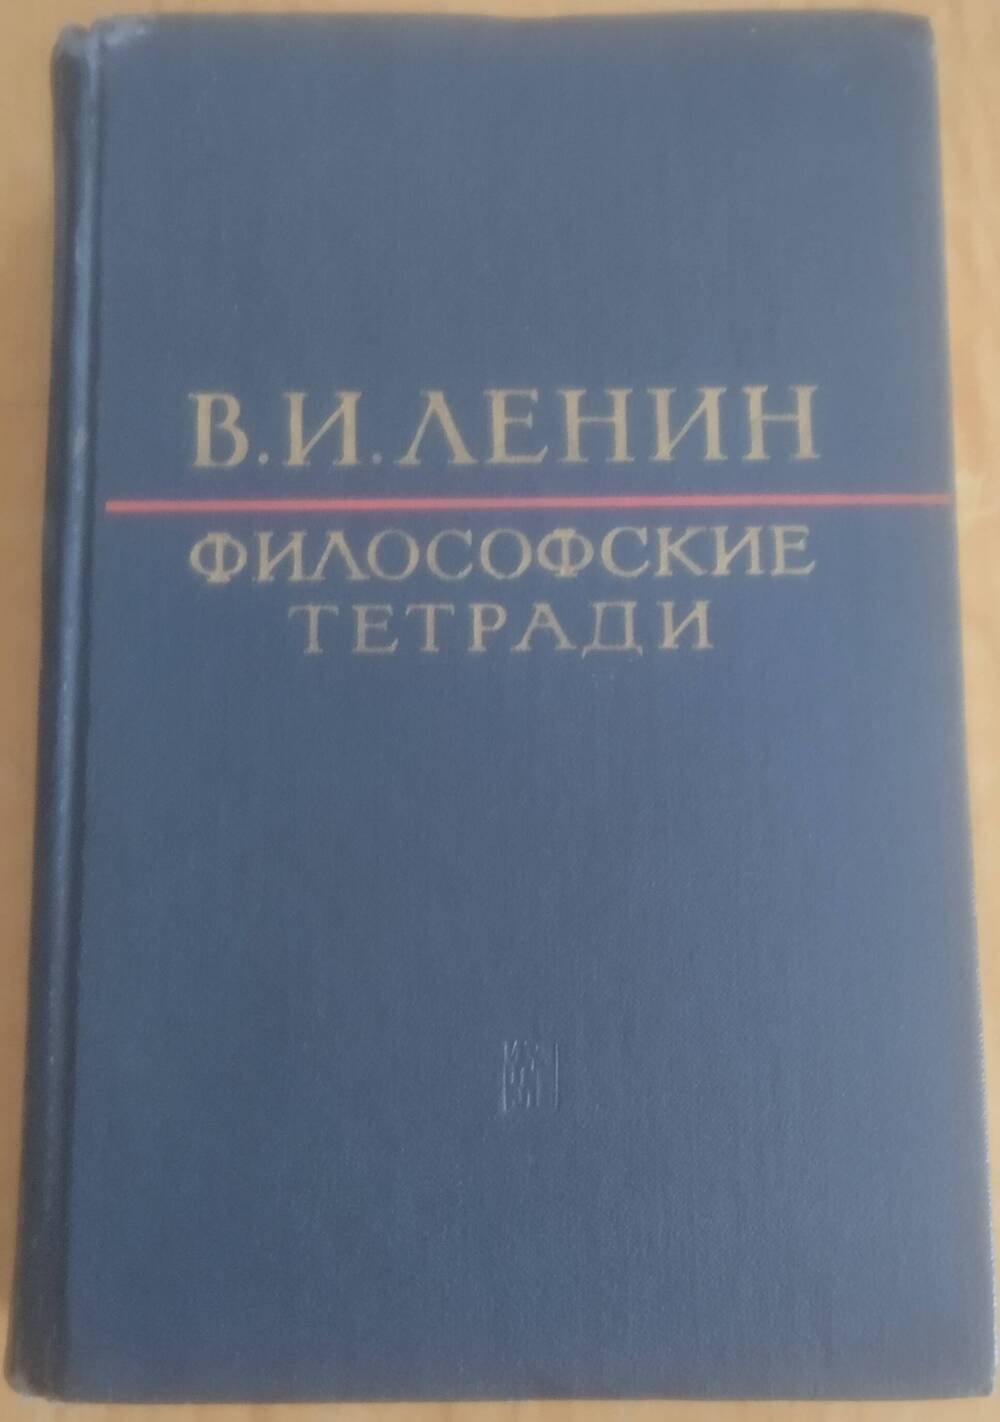 Книга. Ленин В.И. Философские тетради, 752 стр., илл.